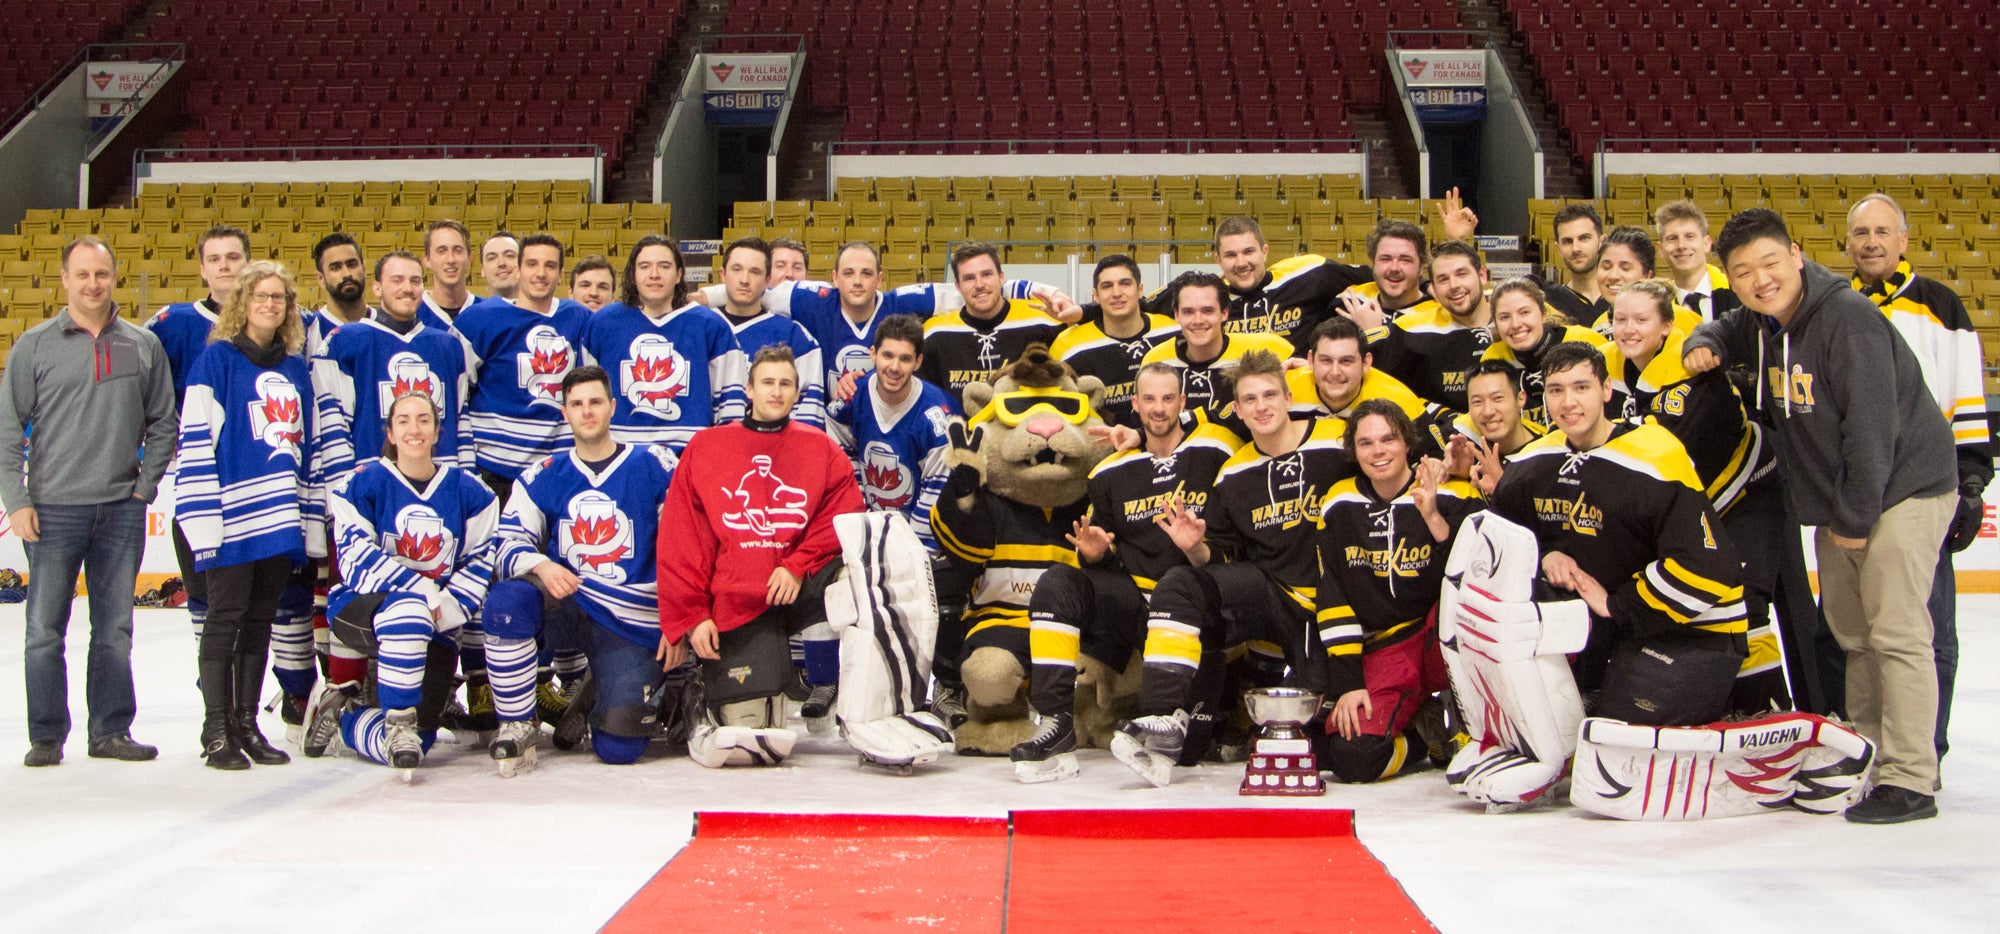 University of Toronto and University of Waterloo pharmacy school hockey teams